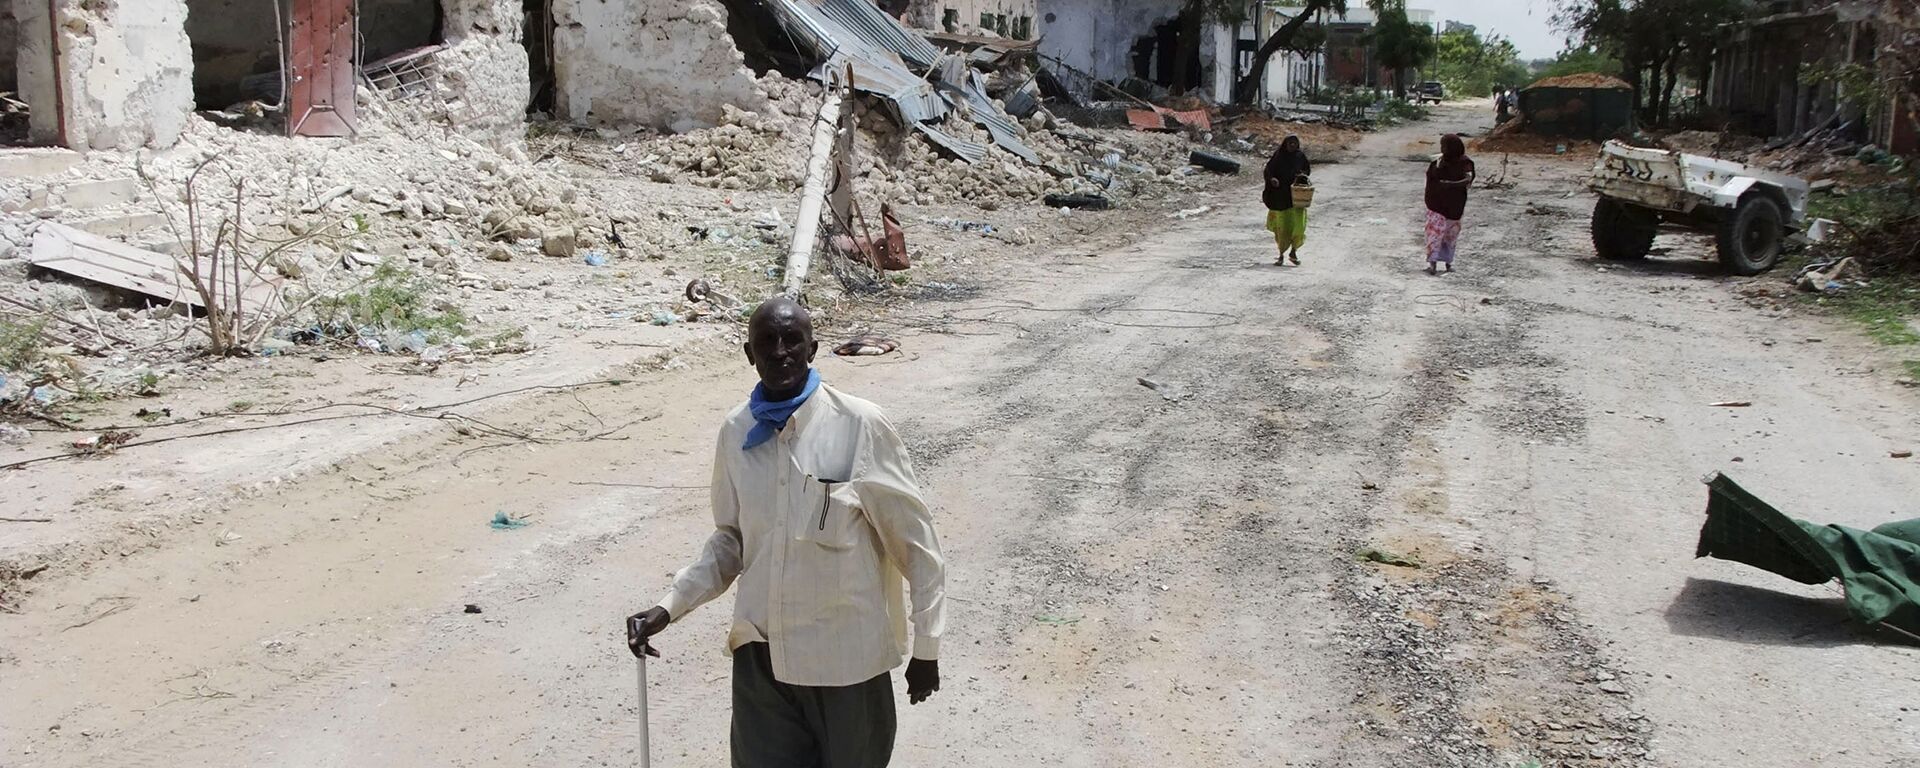 Civilians walk along a street in Mogadishu, Somalia. (File) - Sputnik International, 1920, 11.08.2022